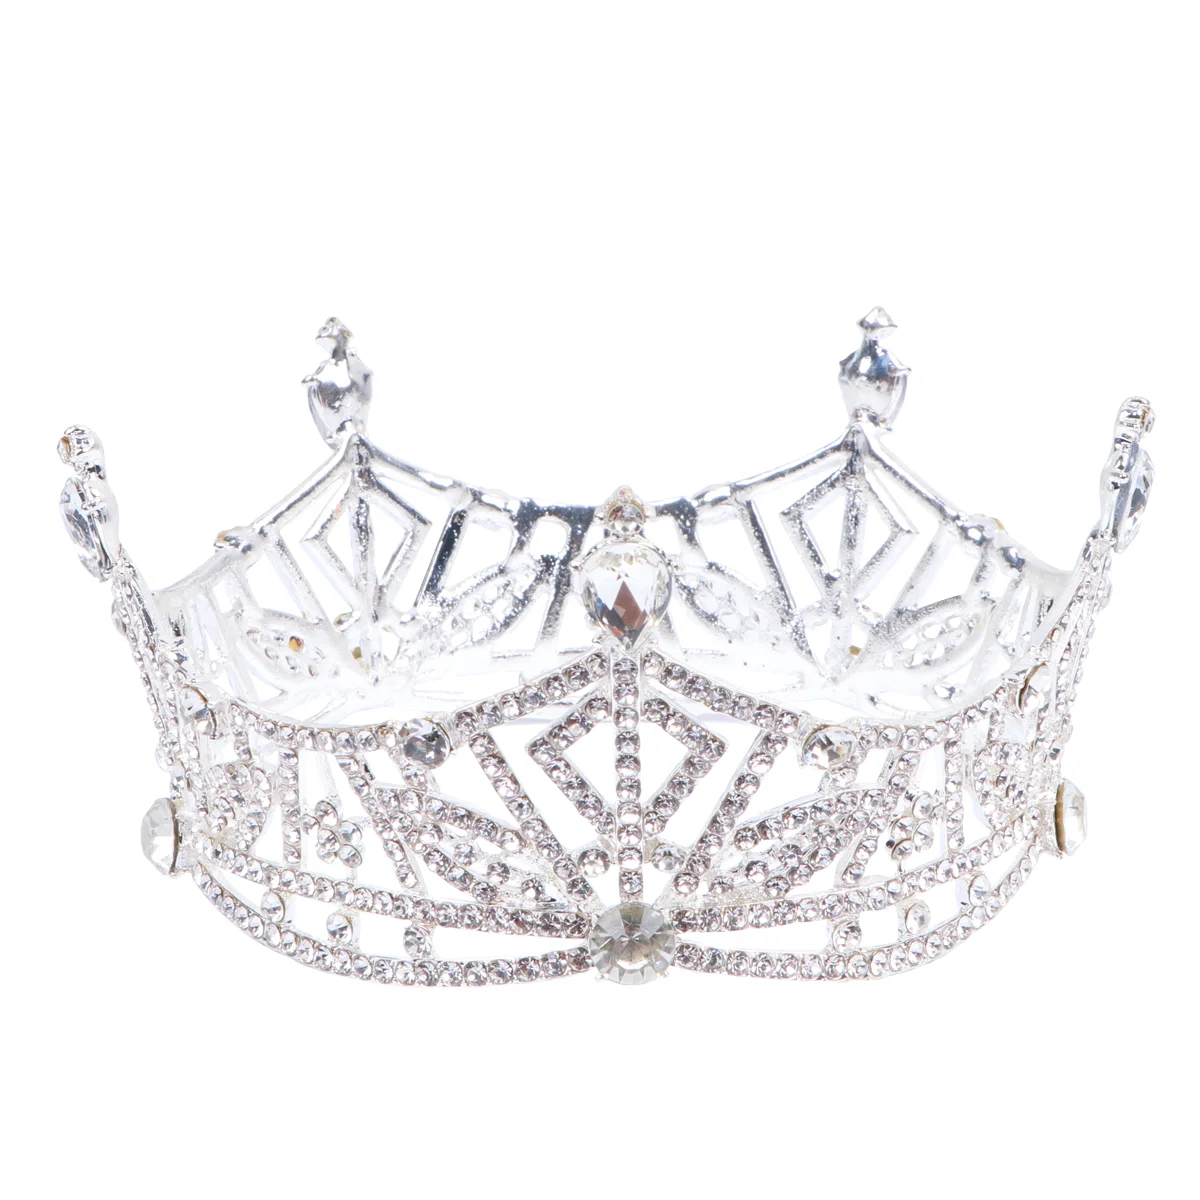 Rhinestone Crown Wedding Princess Crowns Head Pieces Brides Women Hair Accessories